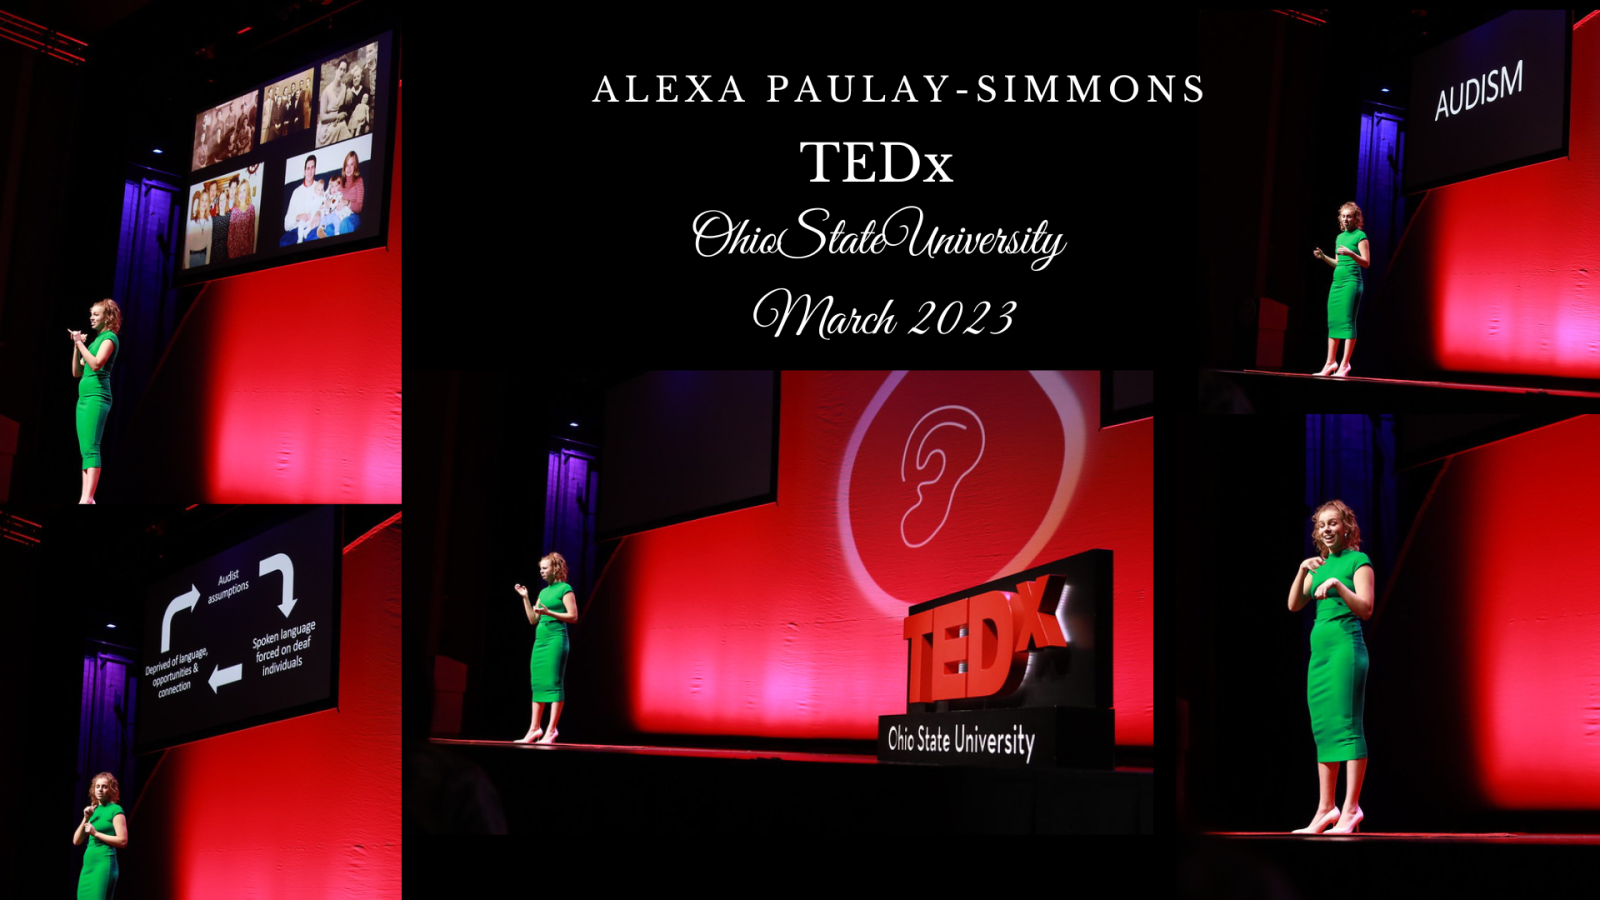 ASL TedX